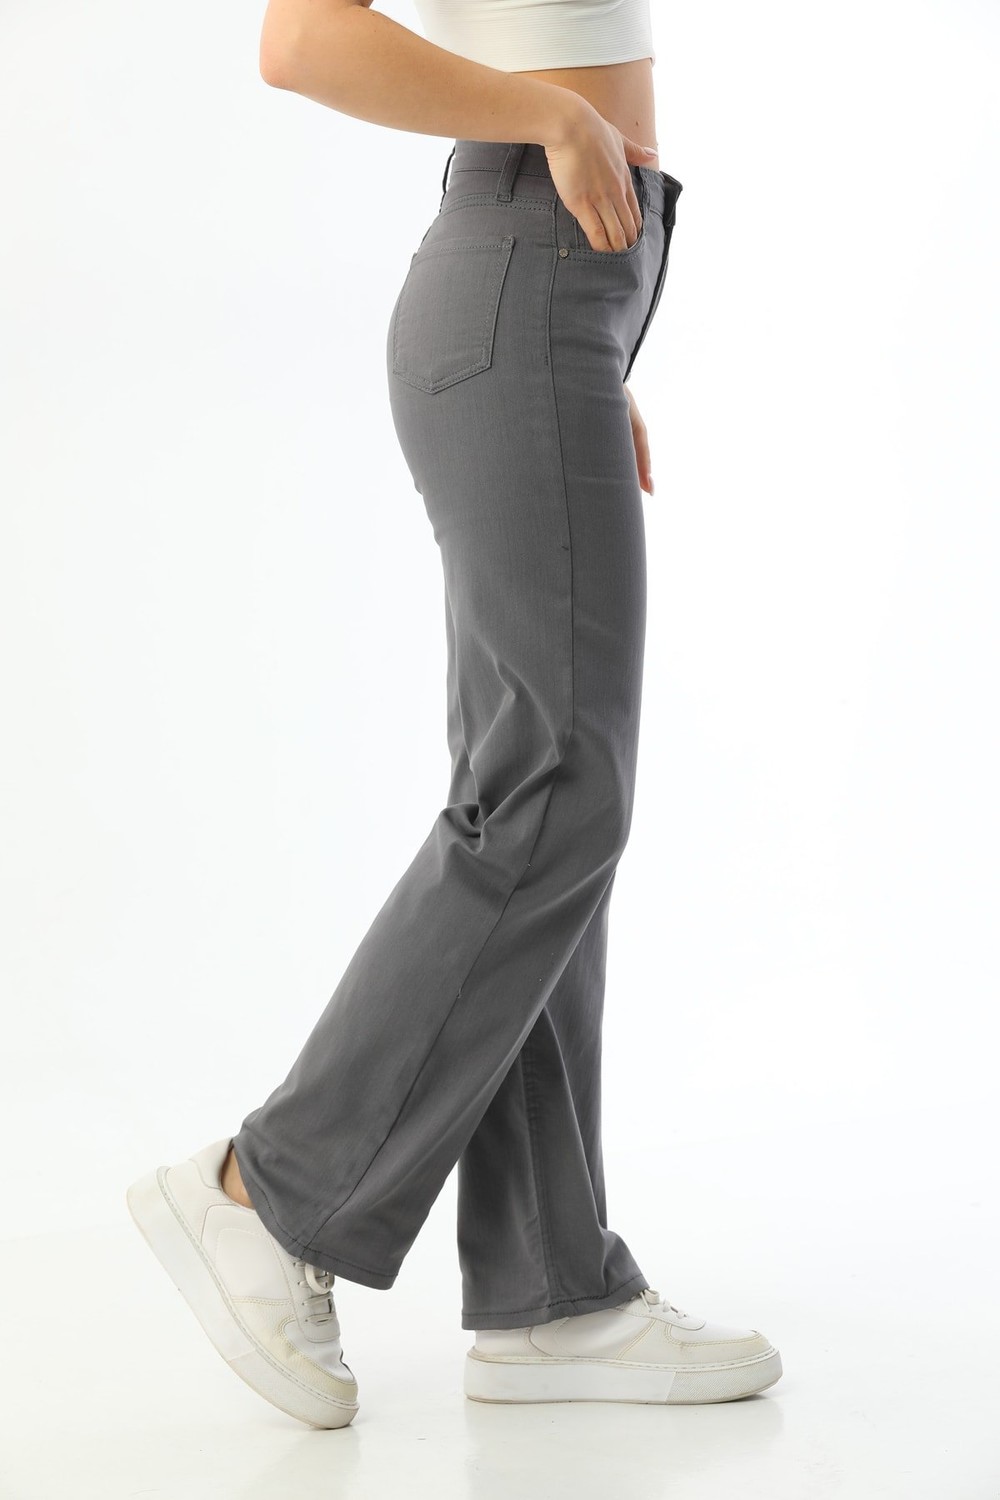 BİKELİFE Women's Gray High Waist Lycra Flexible Wide Leg Palazzo Pants